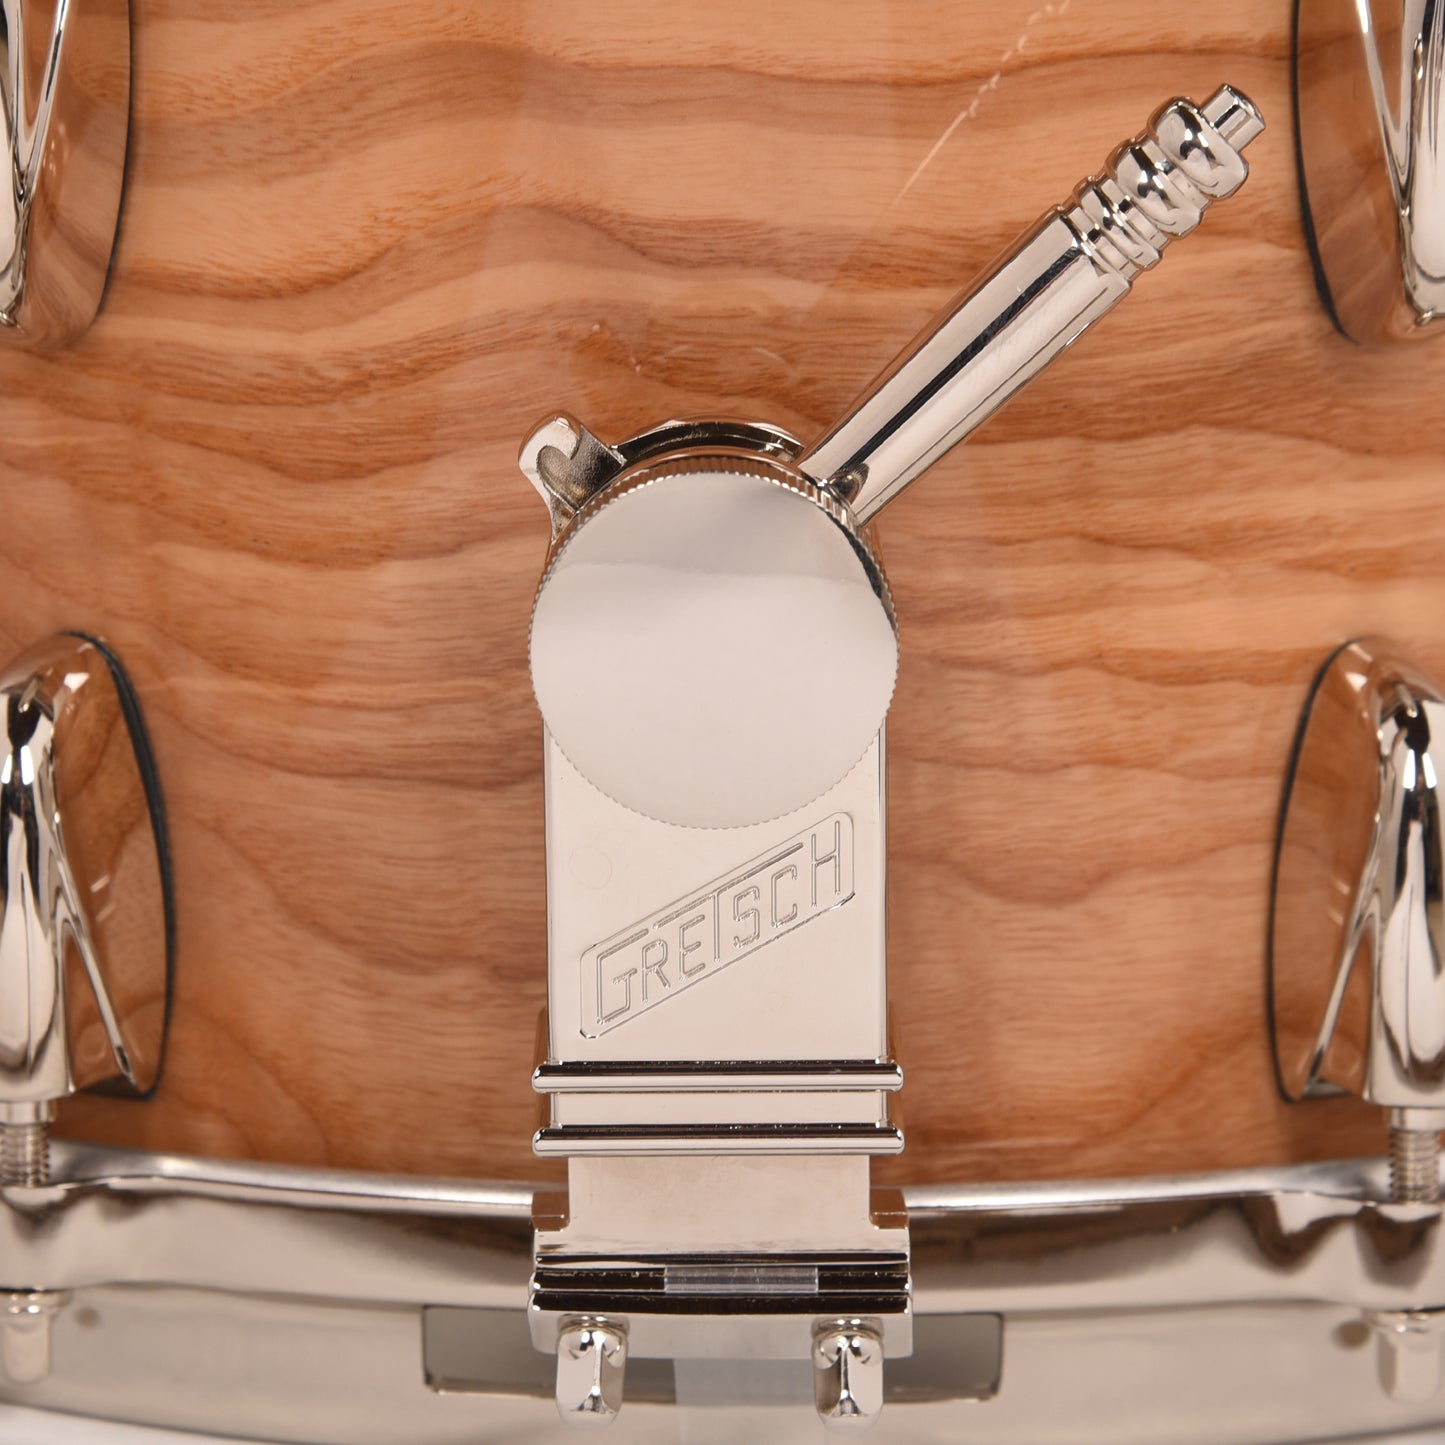 Gretsch 140th Anniversary USA Custom 7x14 Snare Drum Figured Ash w/Nickel Hardware & Bag